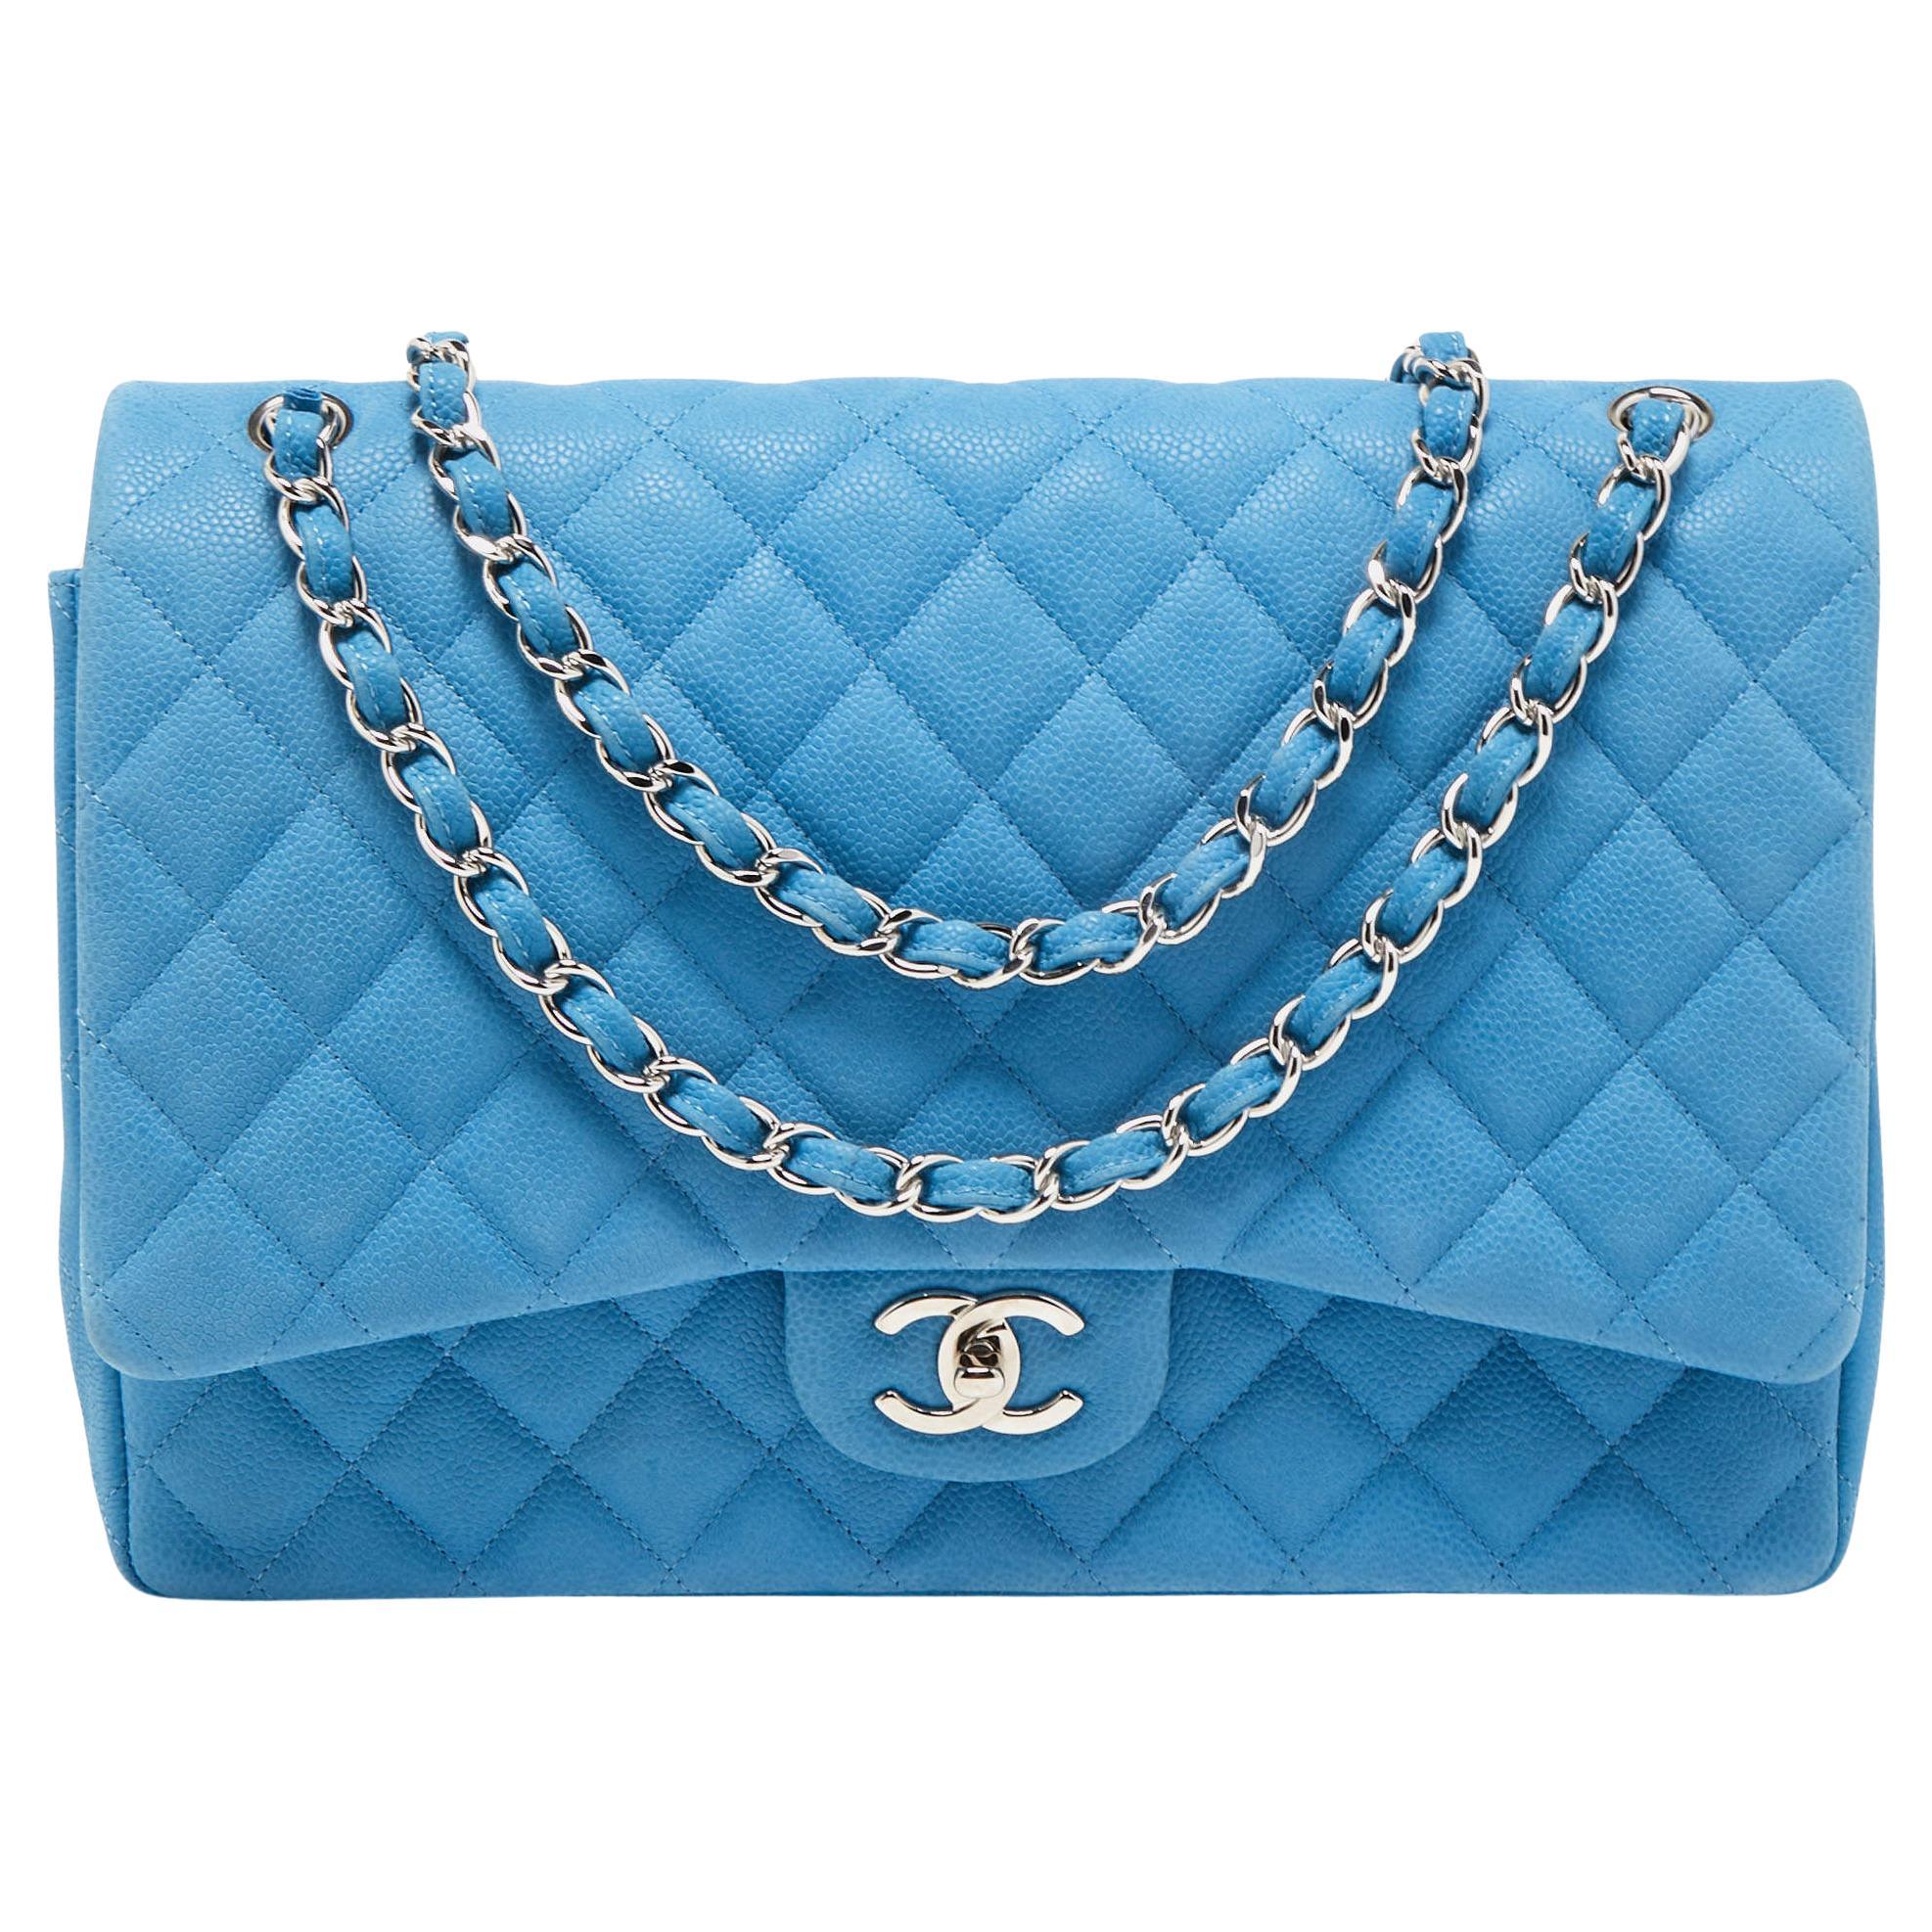 Chanel Blaue Maxi Classic Double Flap Tasche aus gestepptem Kaviarleder